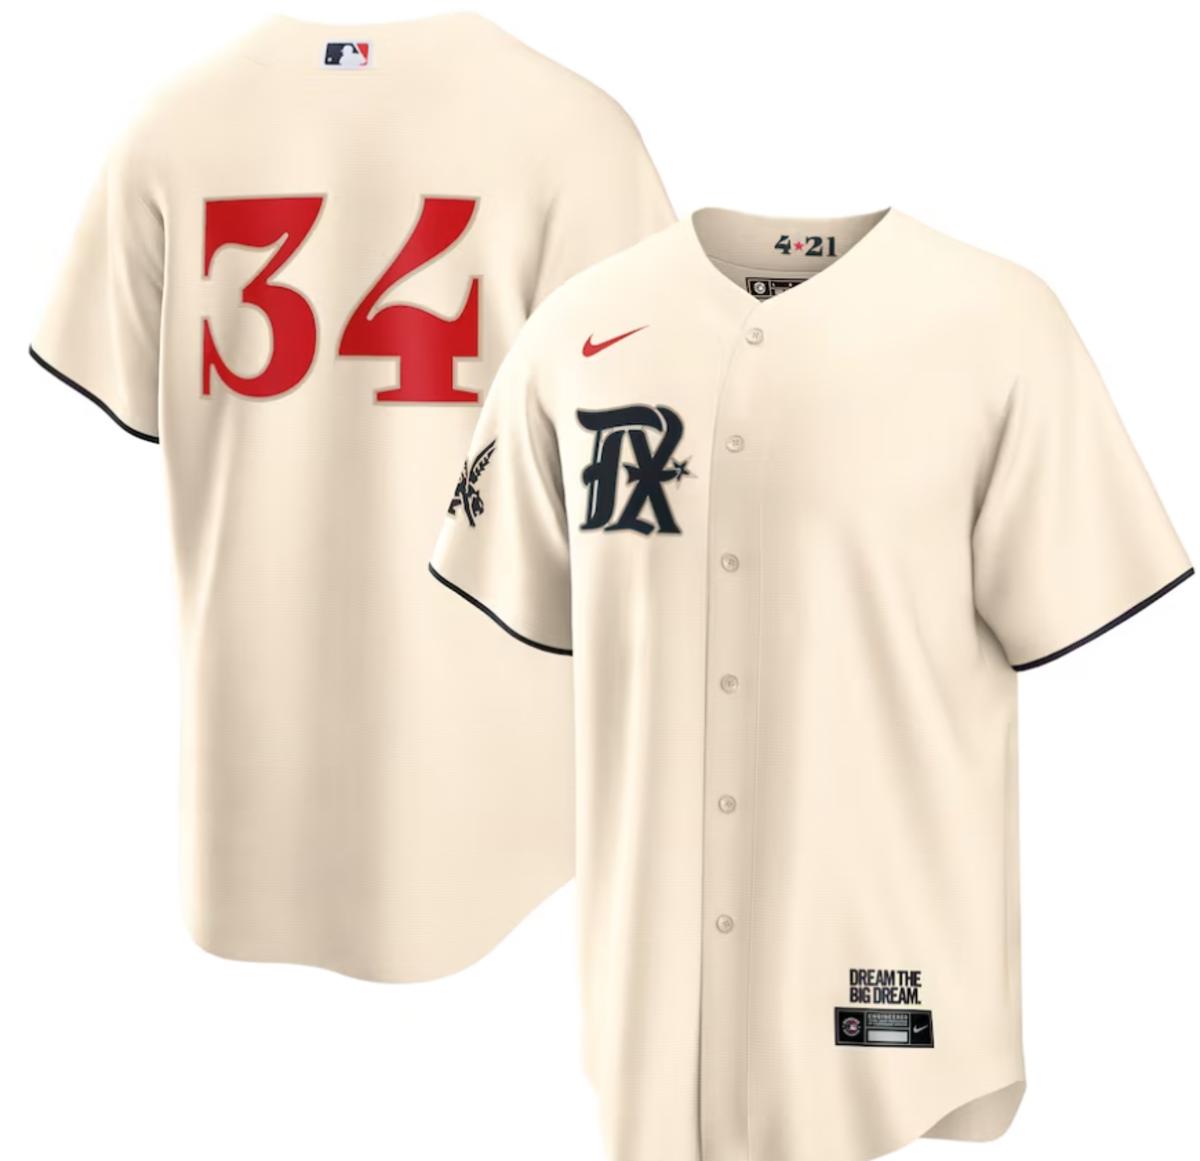 Texas Rangers City Connect jerseys go on sale